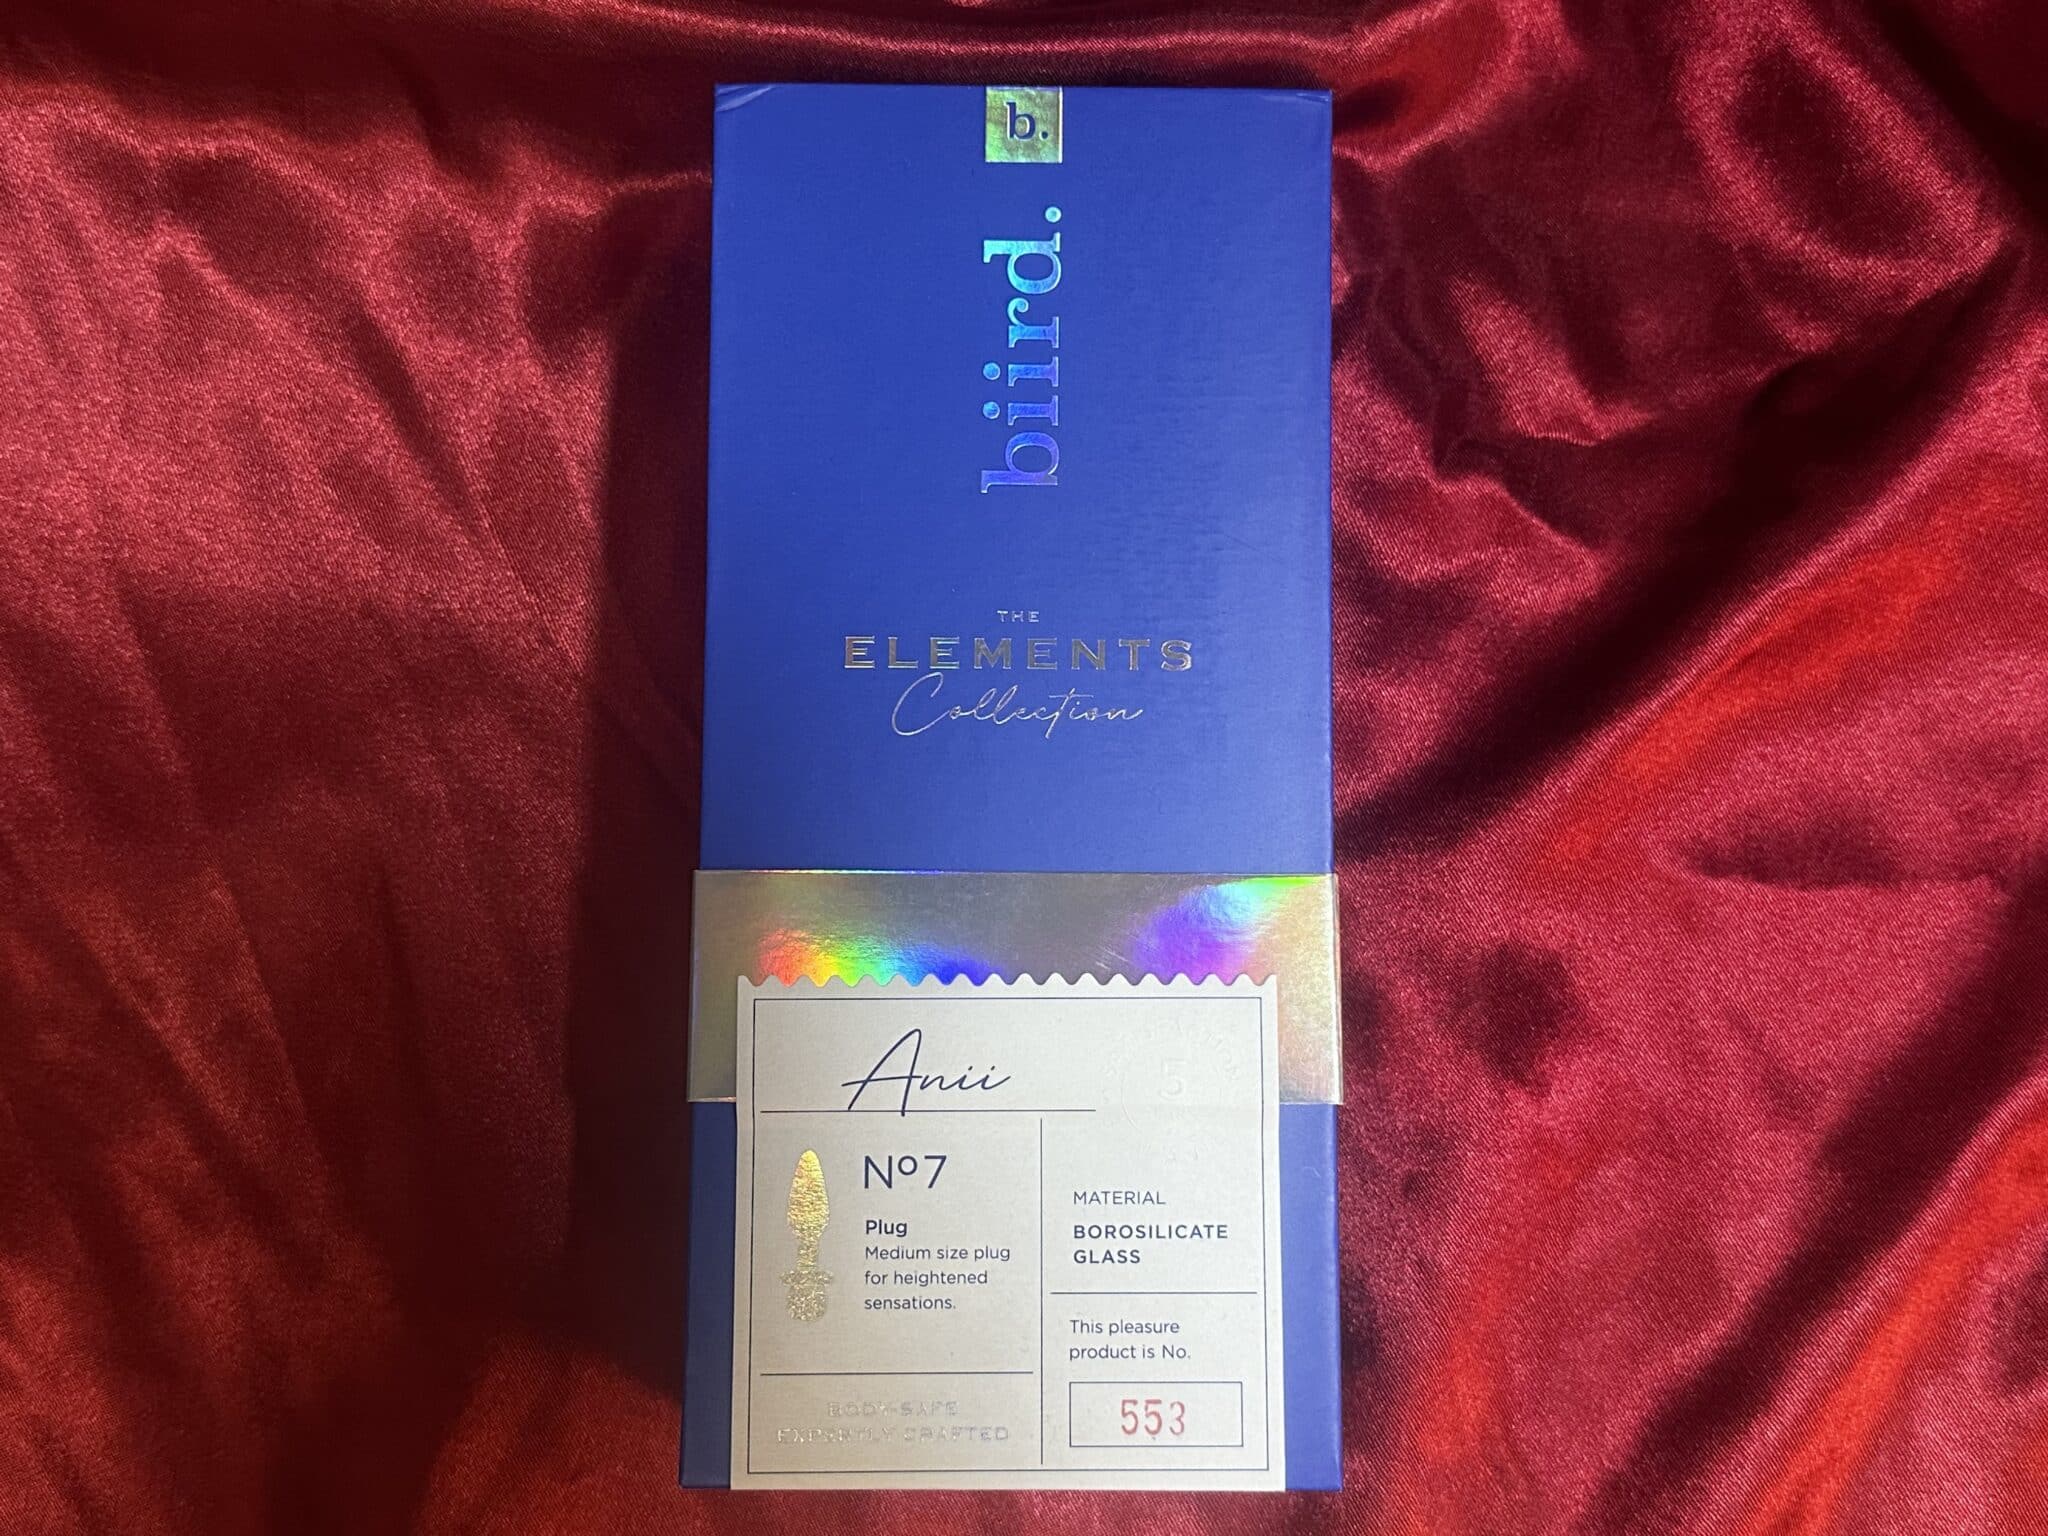 Biird Anii Packaging of the Biird Anii